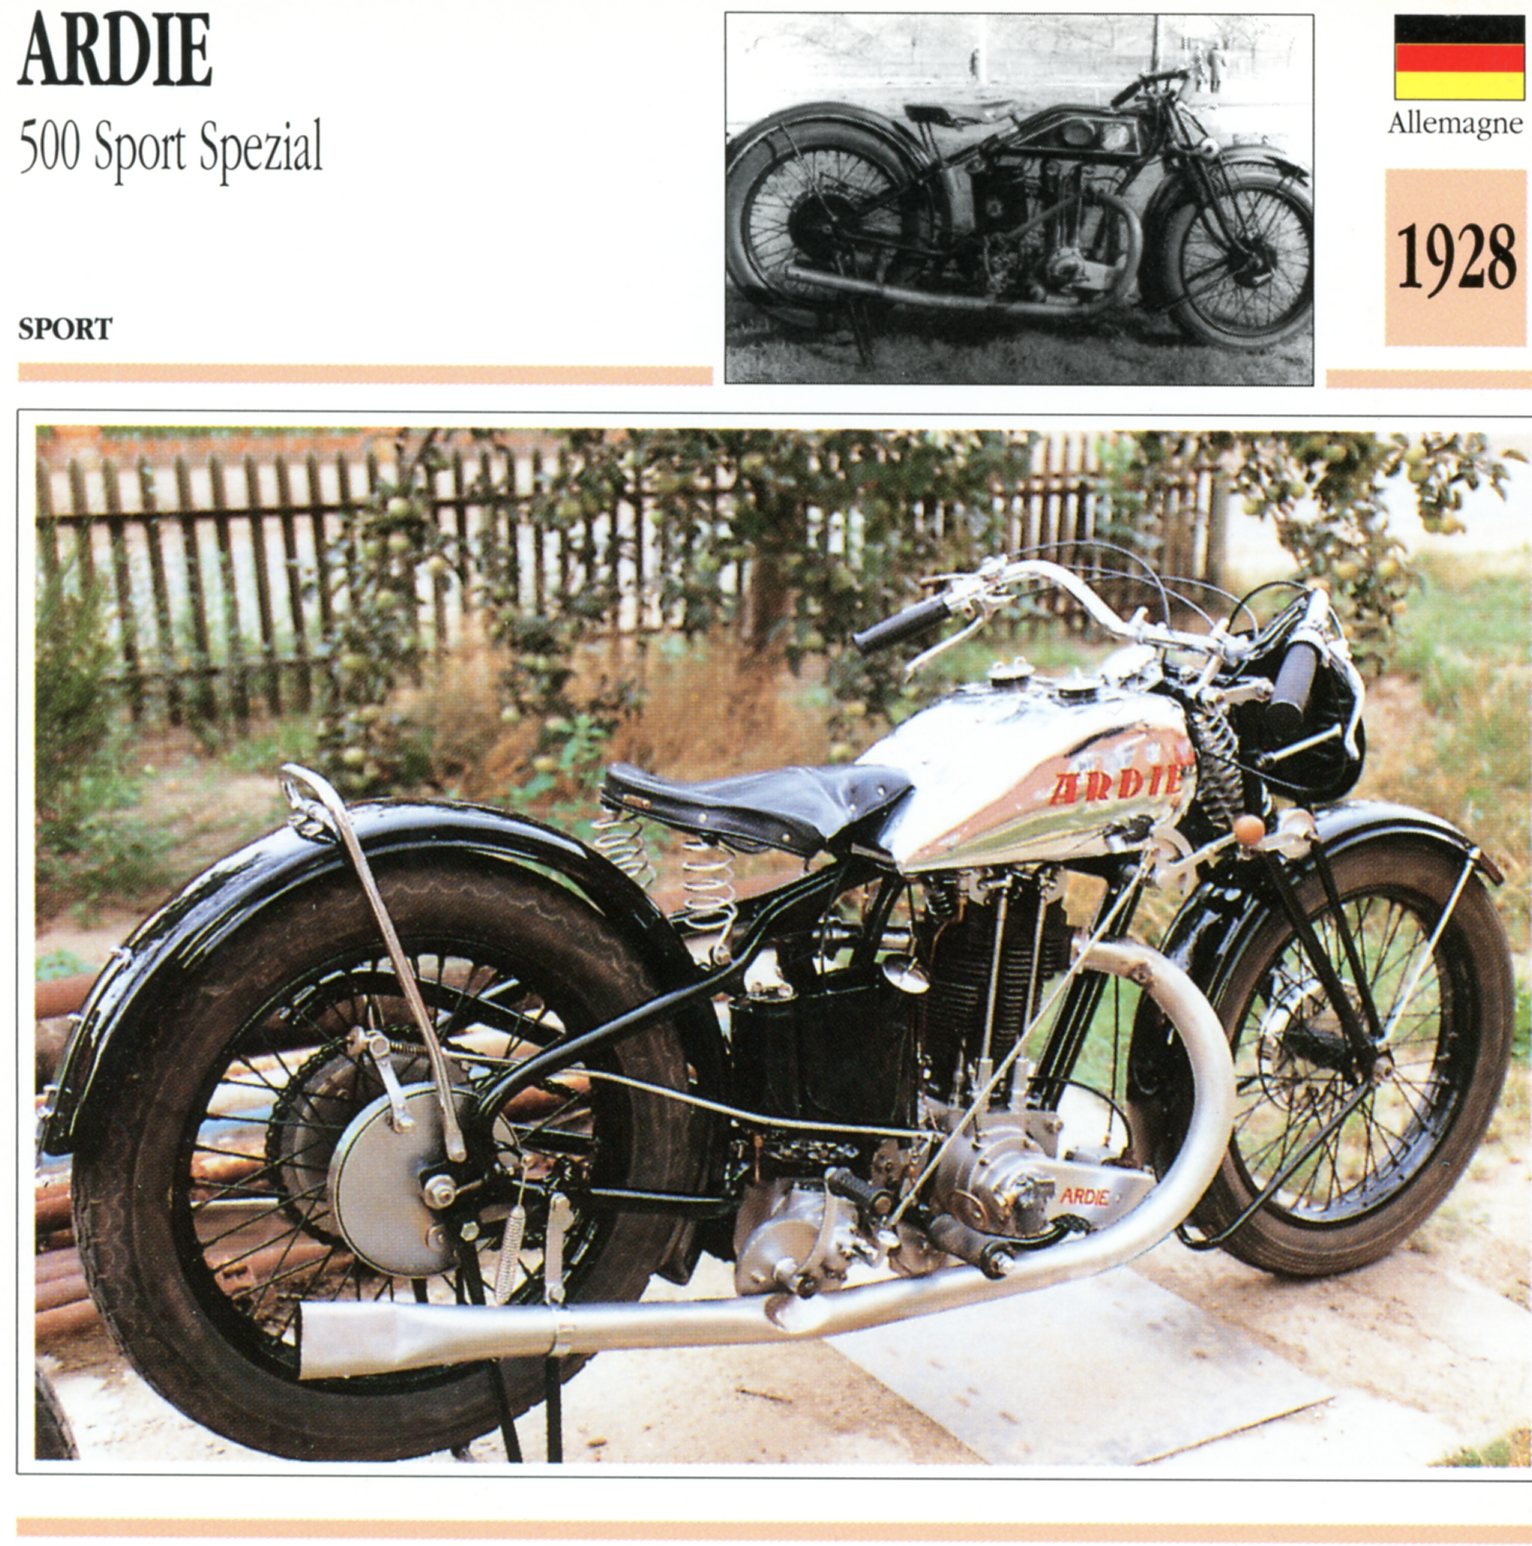 ARDIE 500 SPORT SPECIAL 1928 -CARTE-CARD-FICHE-MOTO-LEMASTERBROCKERS